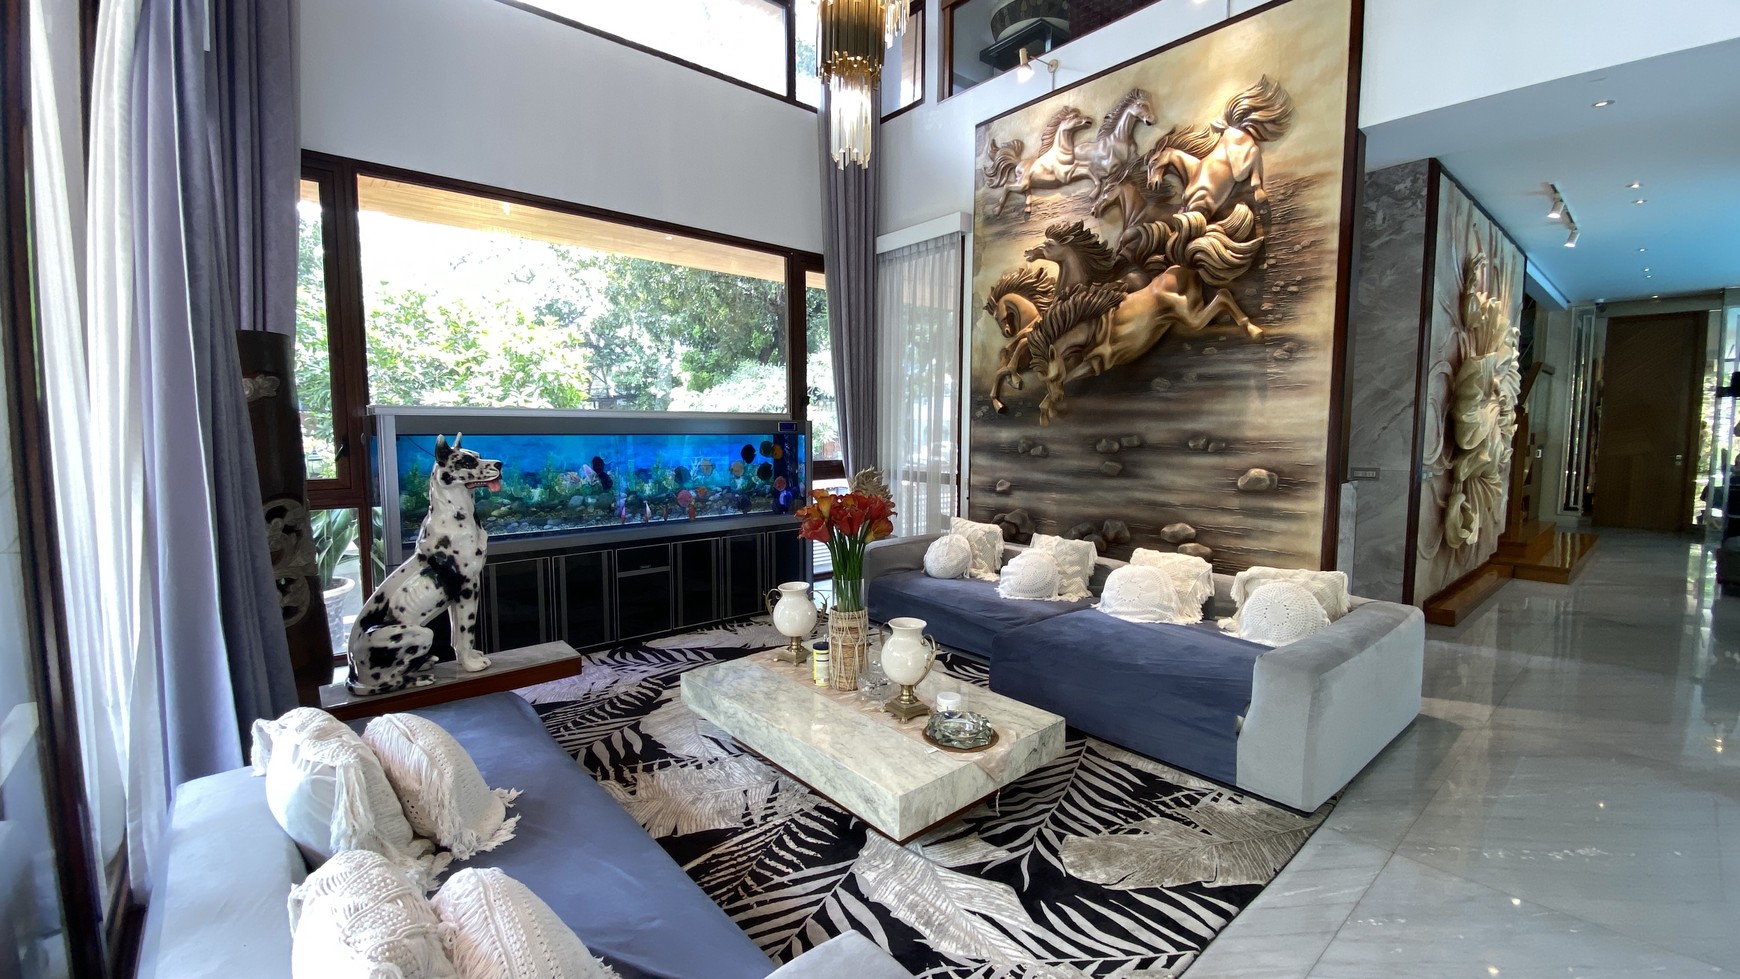 Rumah super Luxury di kawasan kebayoran baru, jakarta selatan